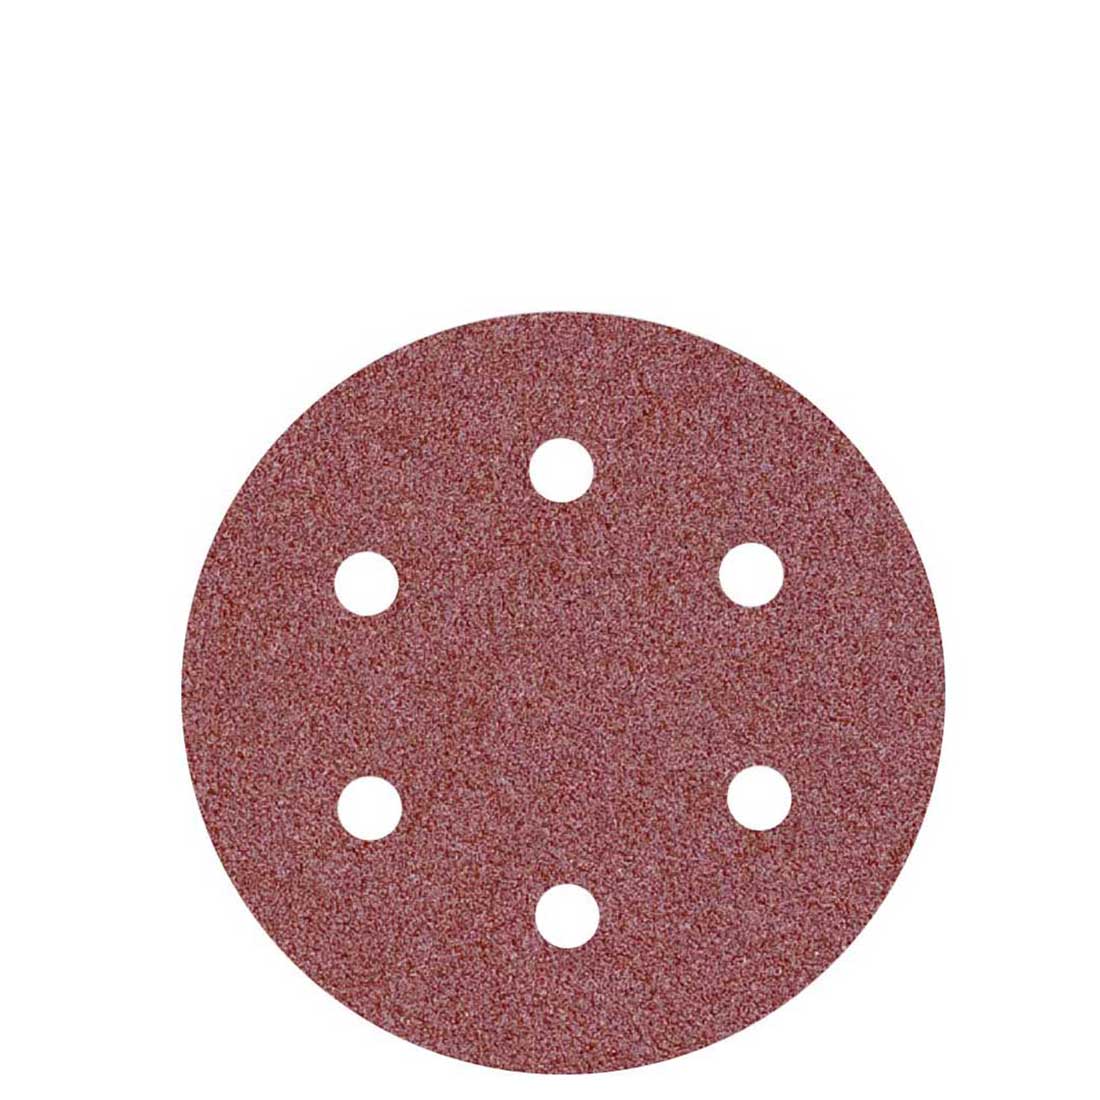 MioTools hook & loop sanding discs for random orbital sanders, G24–240, Ø 150 mm / 6 hole / aluminium oxide